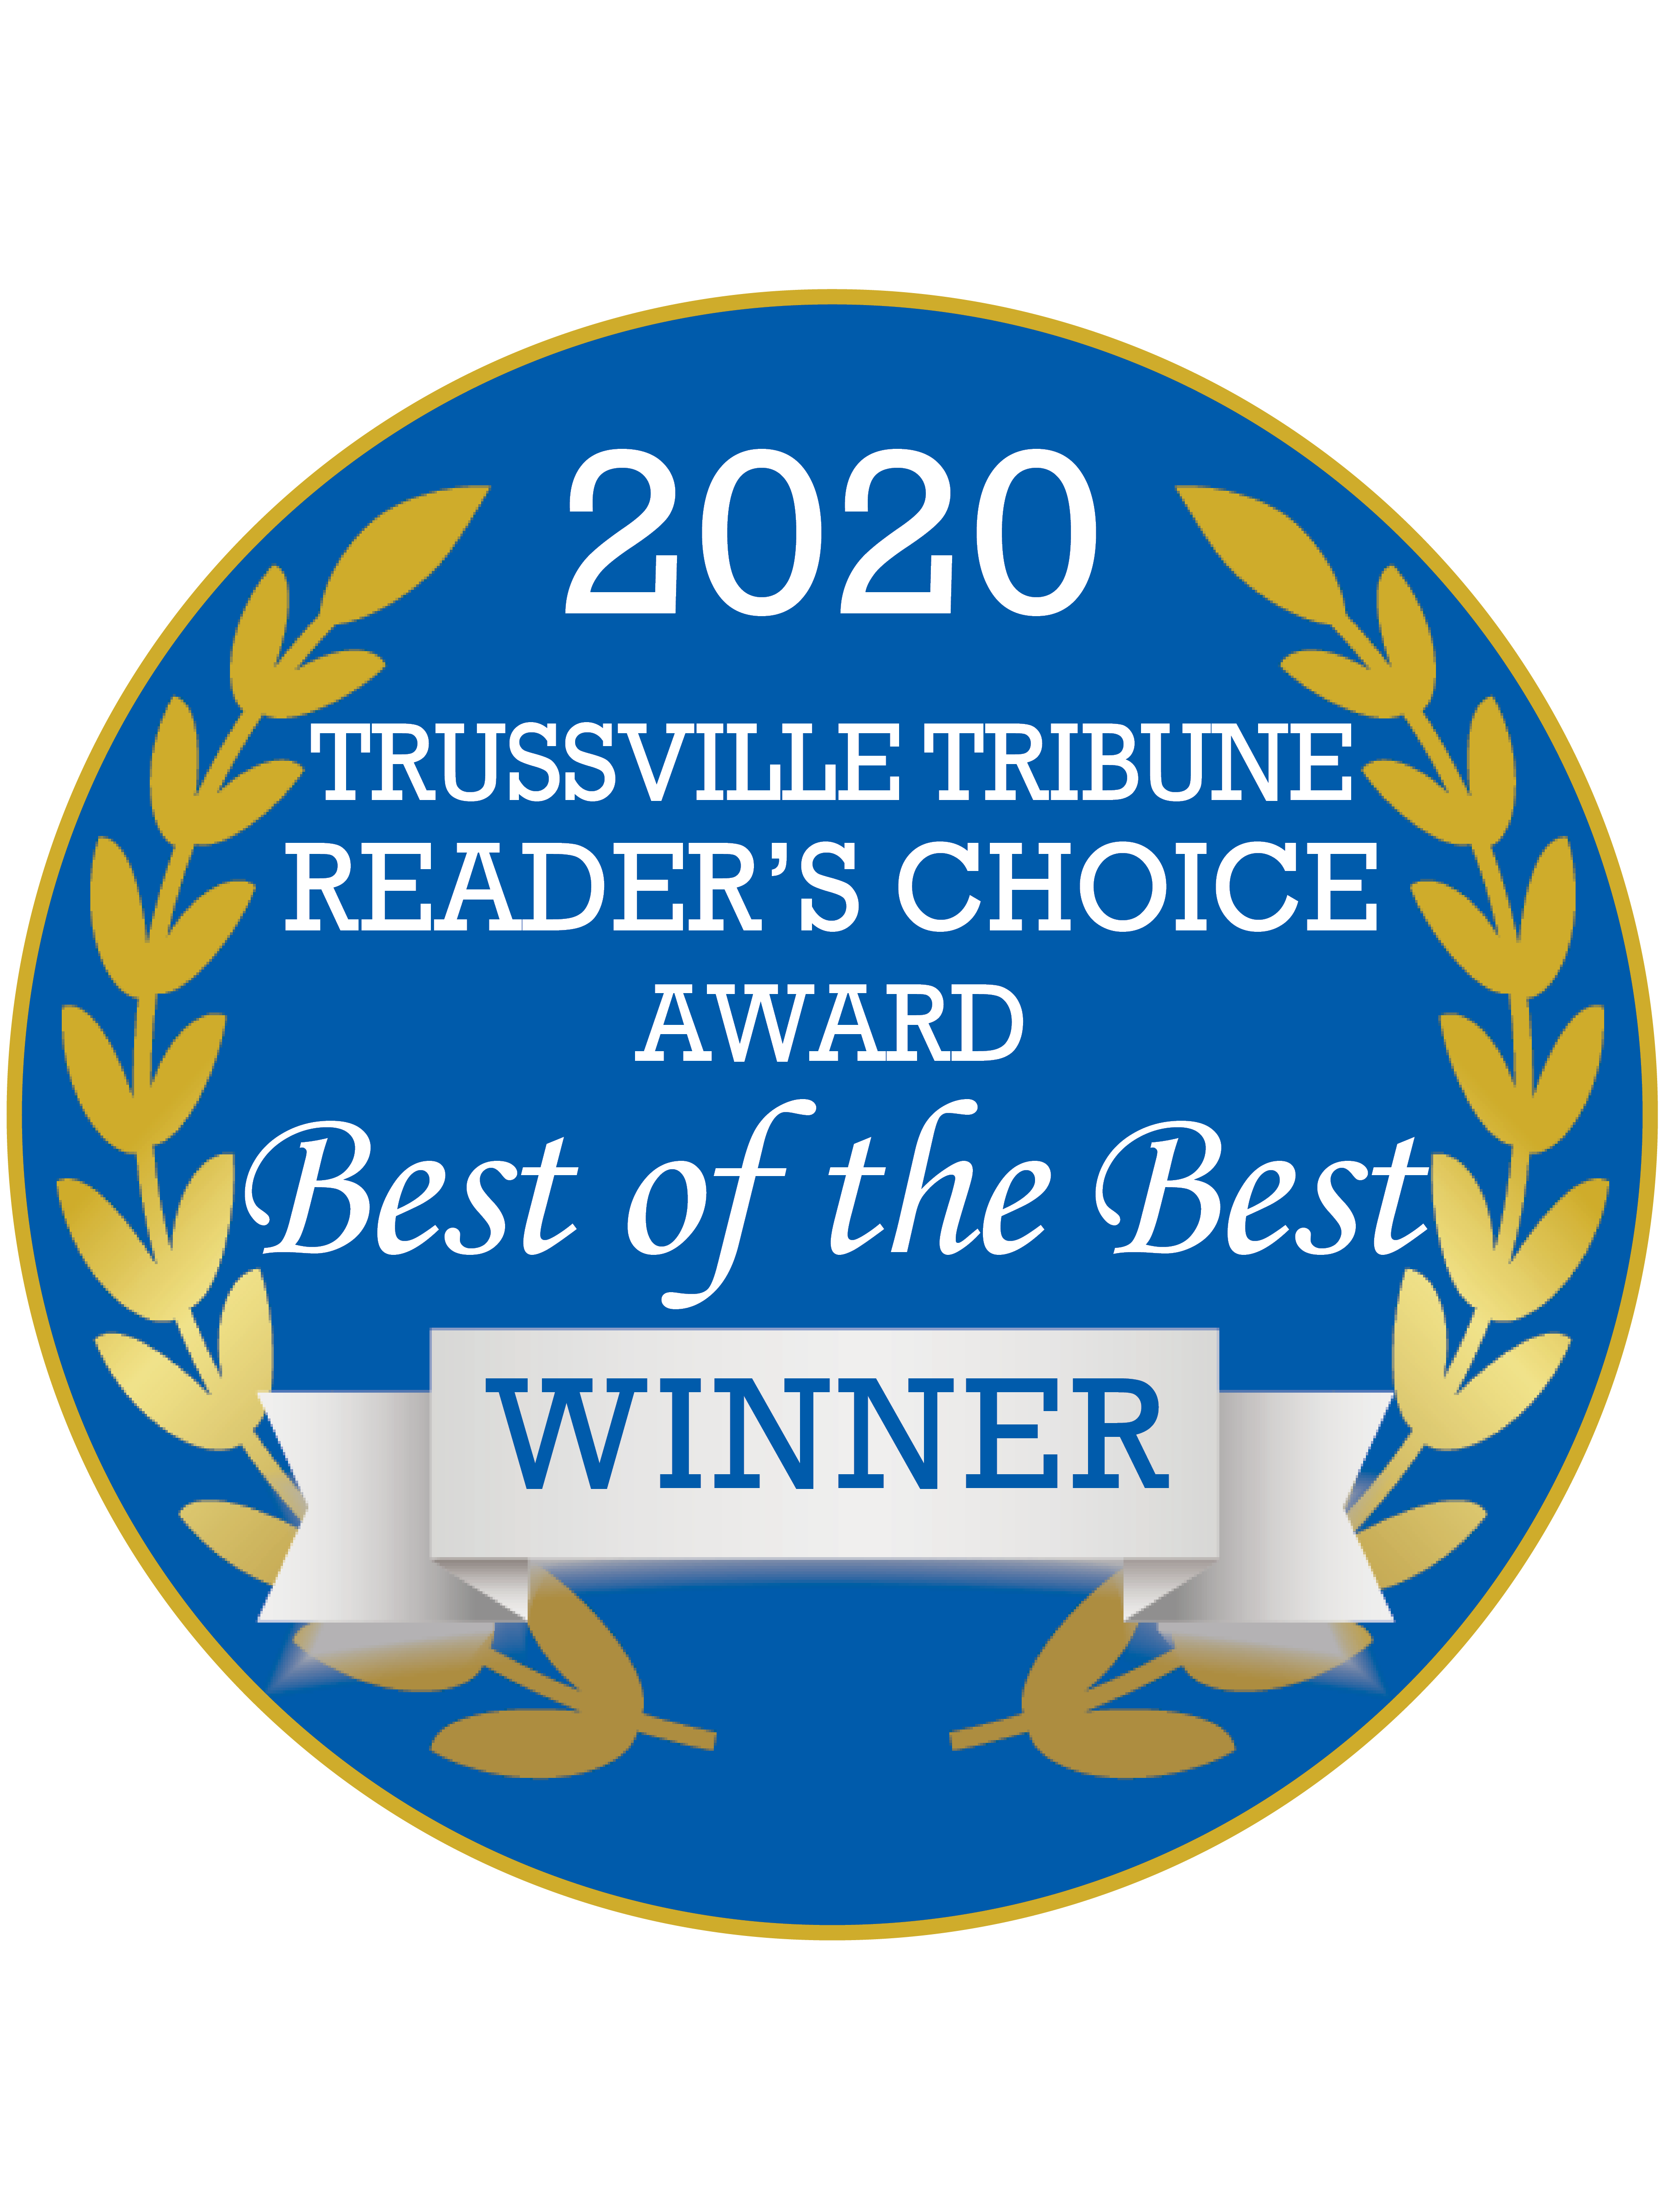 VIDEO: 2020 Tribune Reader's Choice Awards winners announced